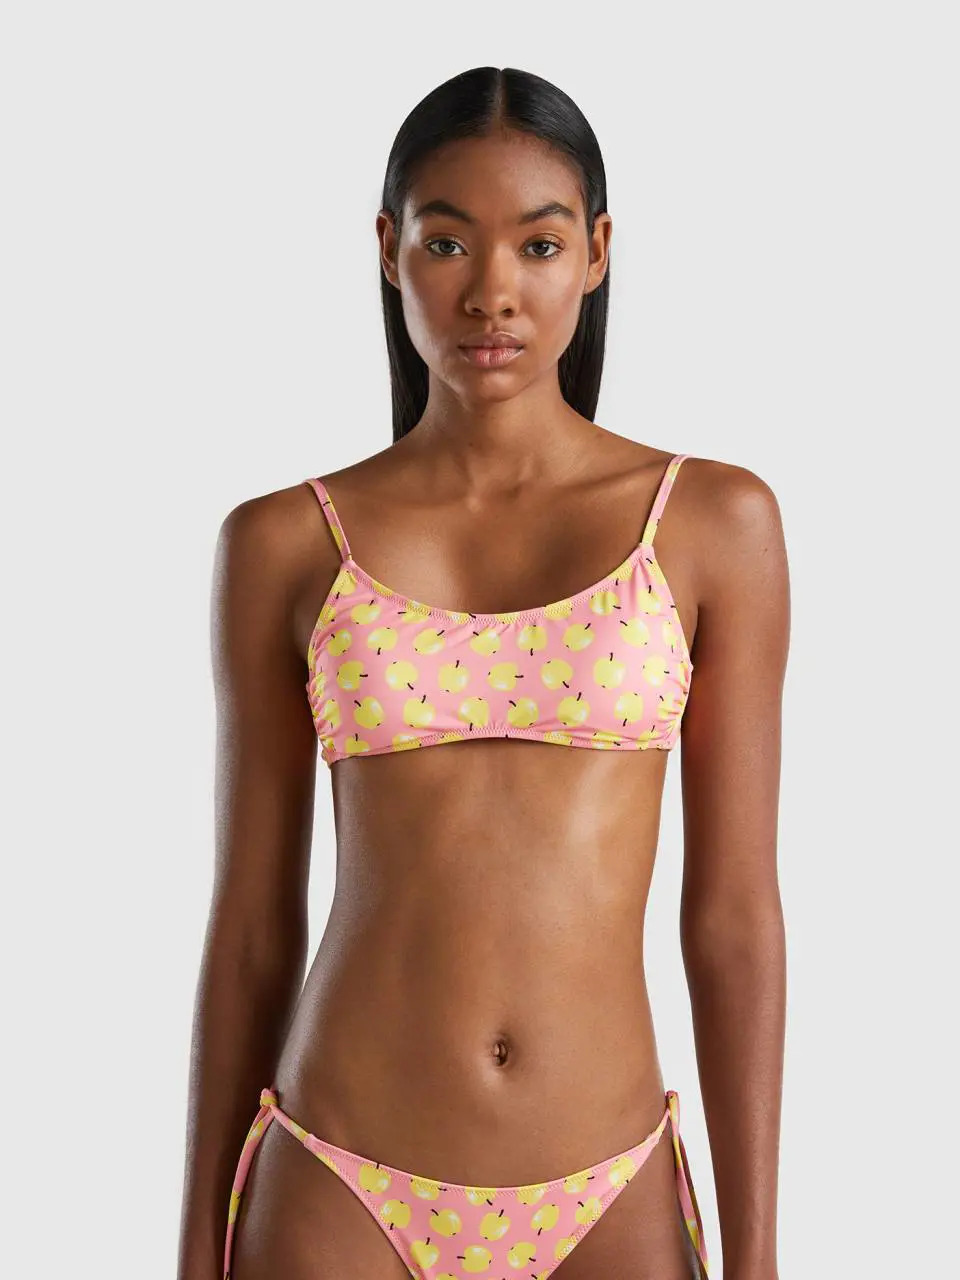 Benetton pink beach bra top with apple pattern. 1